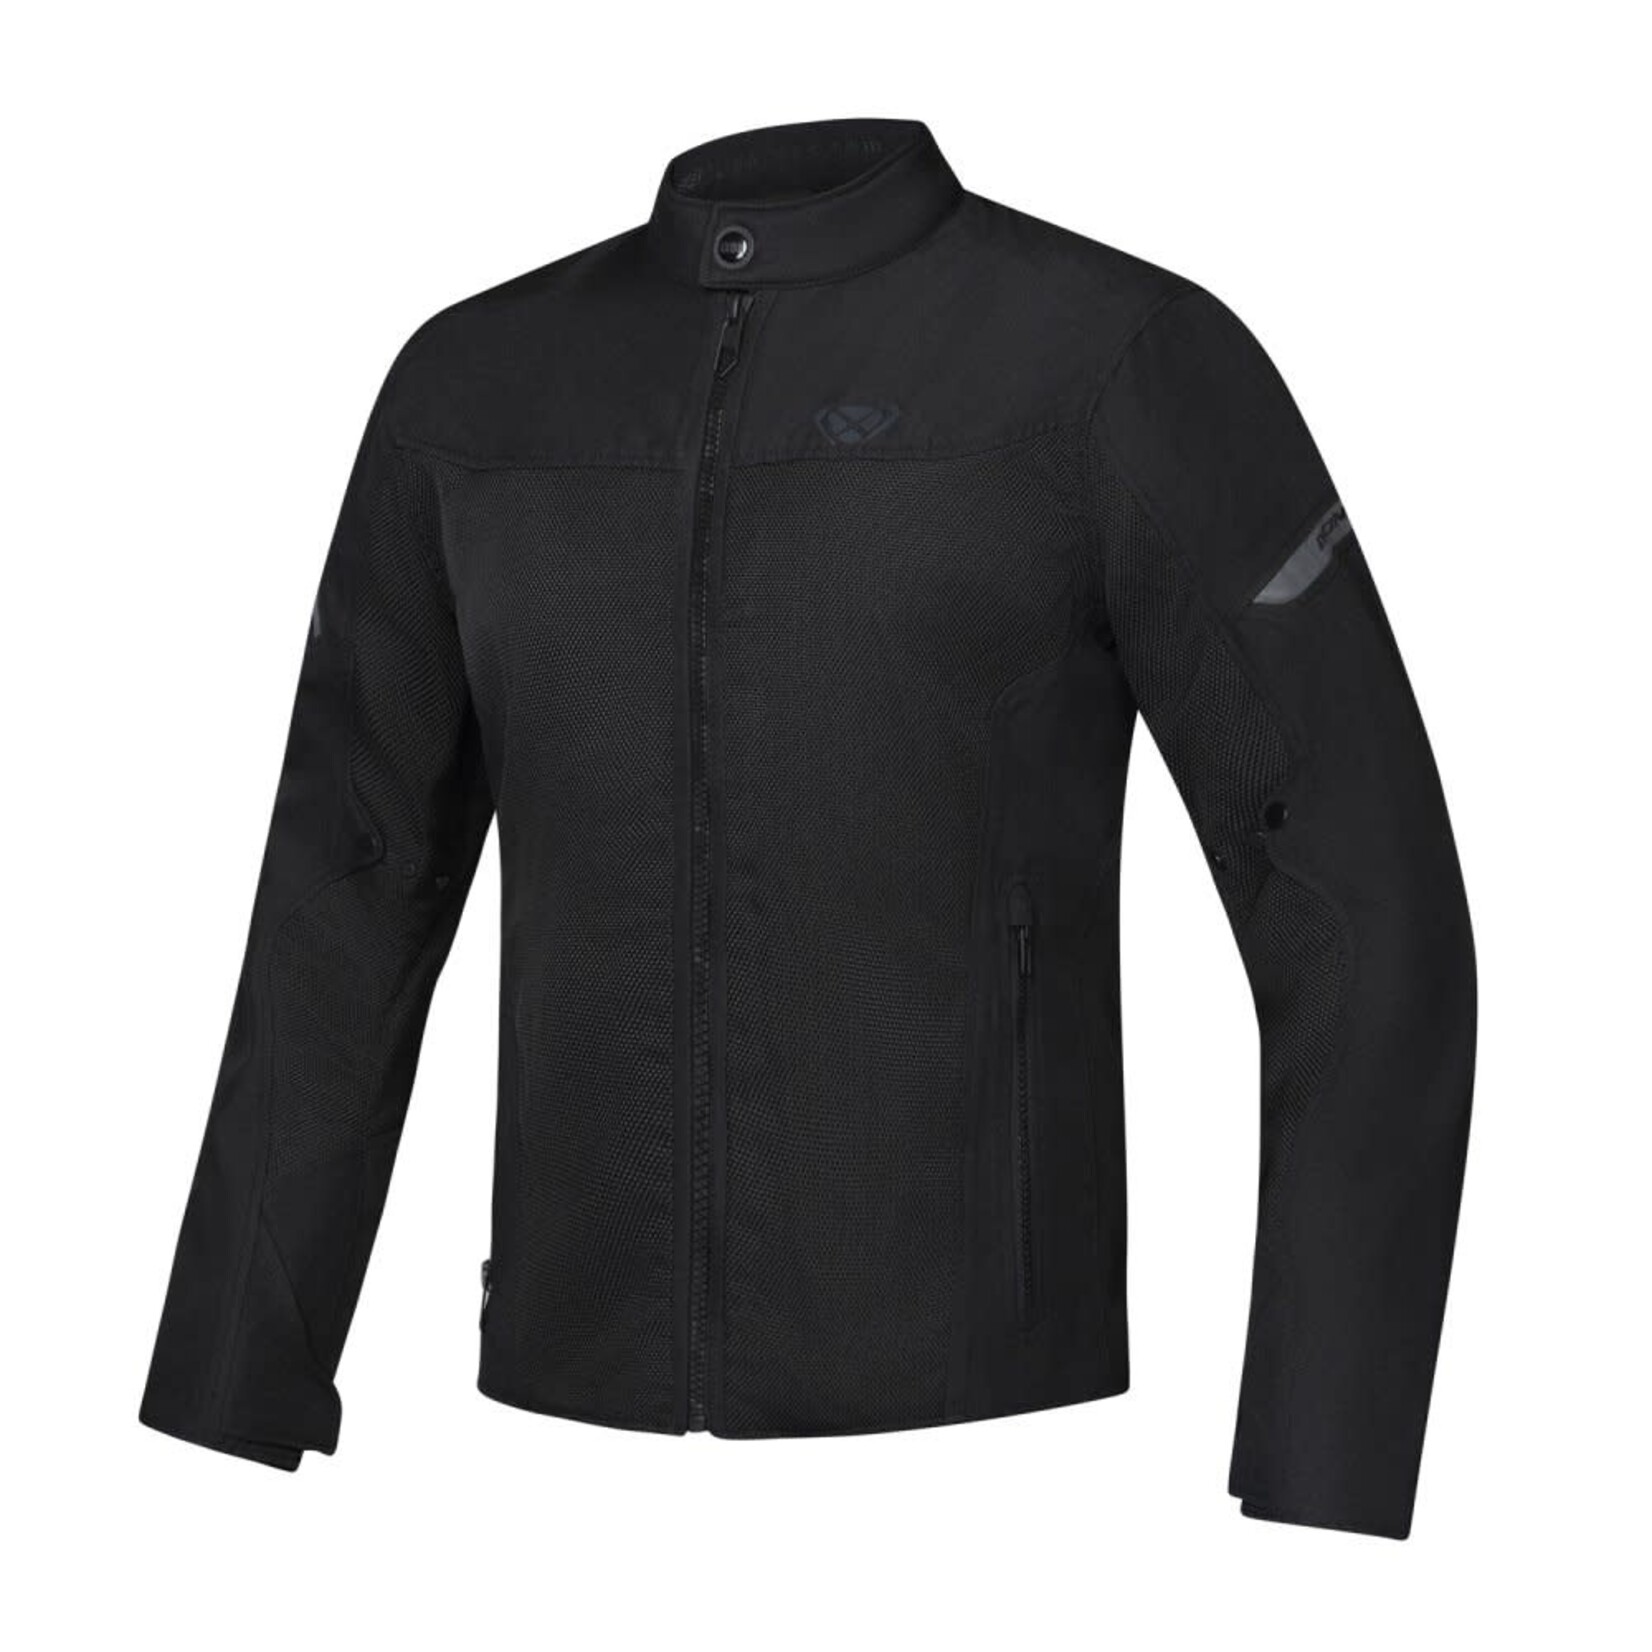 Ixon Ixon jacket textile fresh slim black